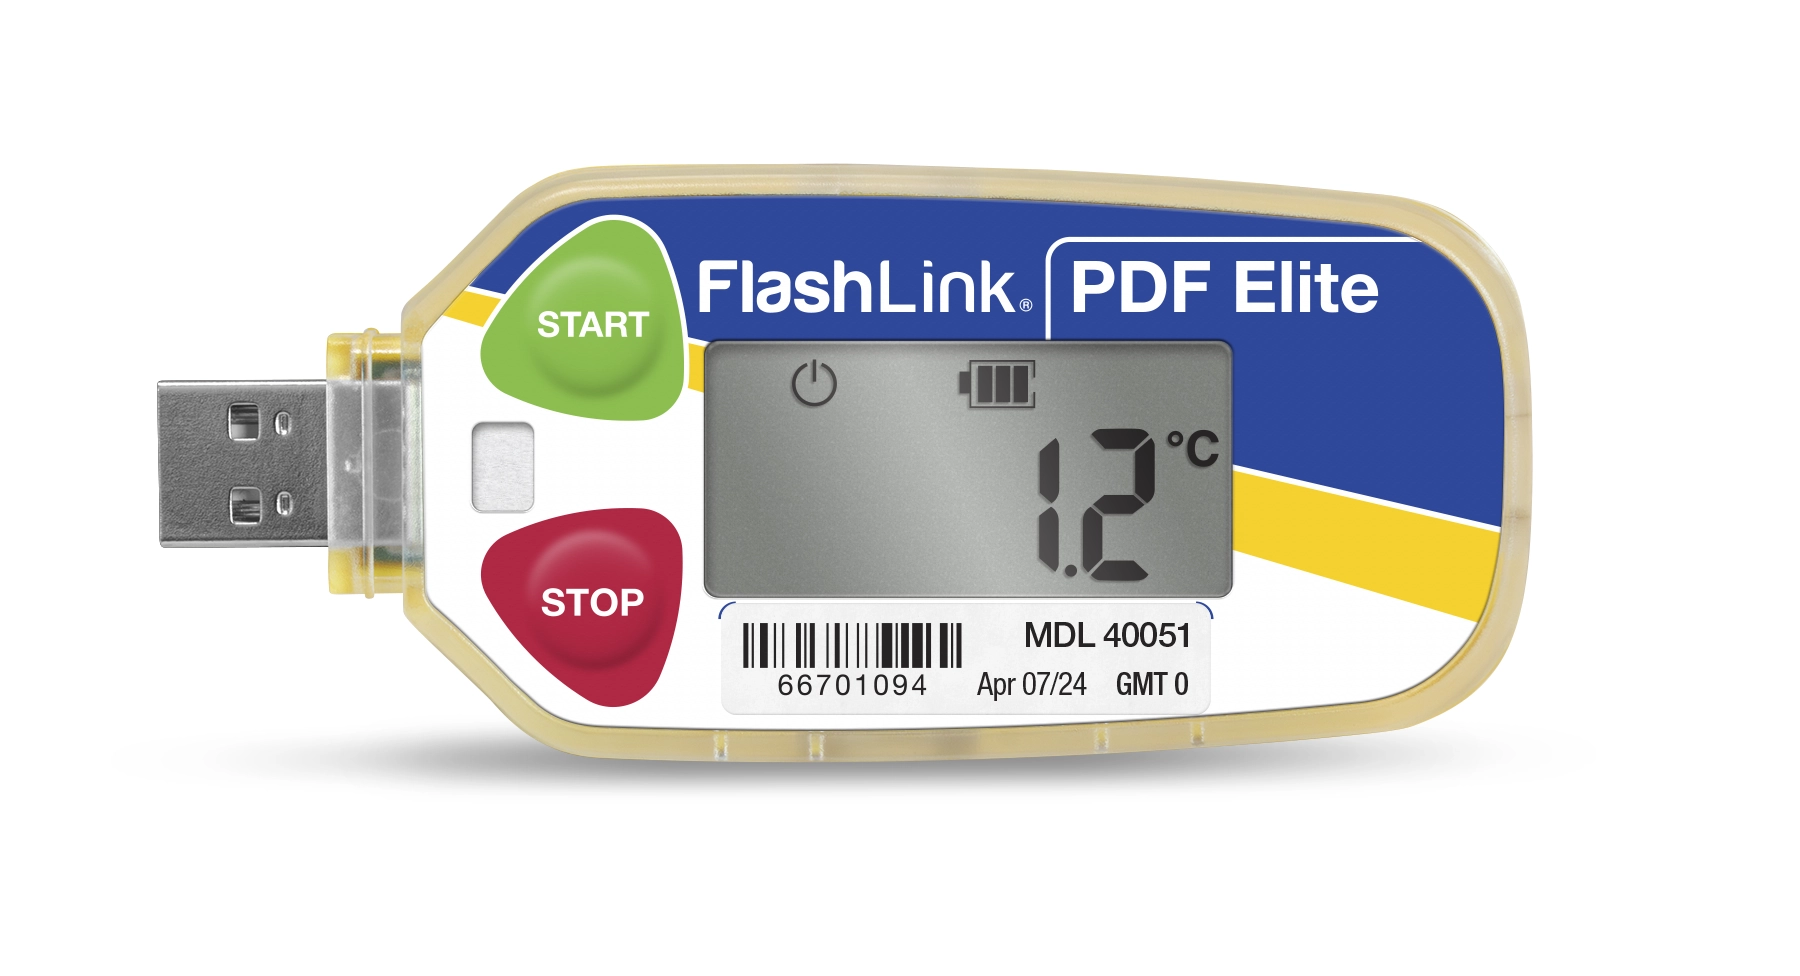 FlashLink® PDF Elite °F/°C In-Transit Logger, Model 40051